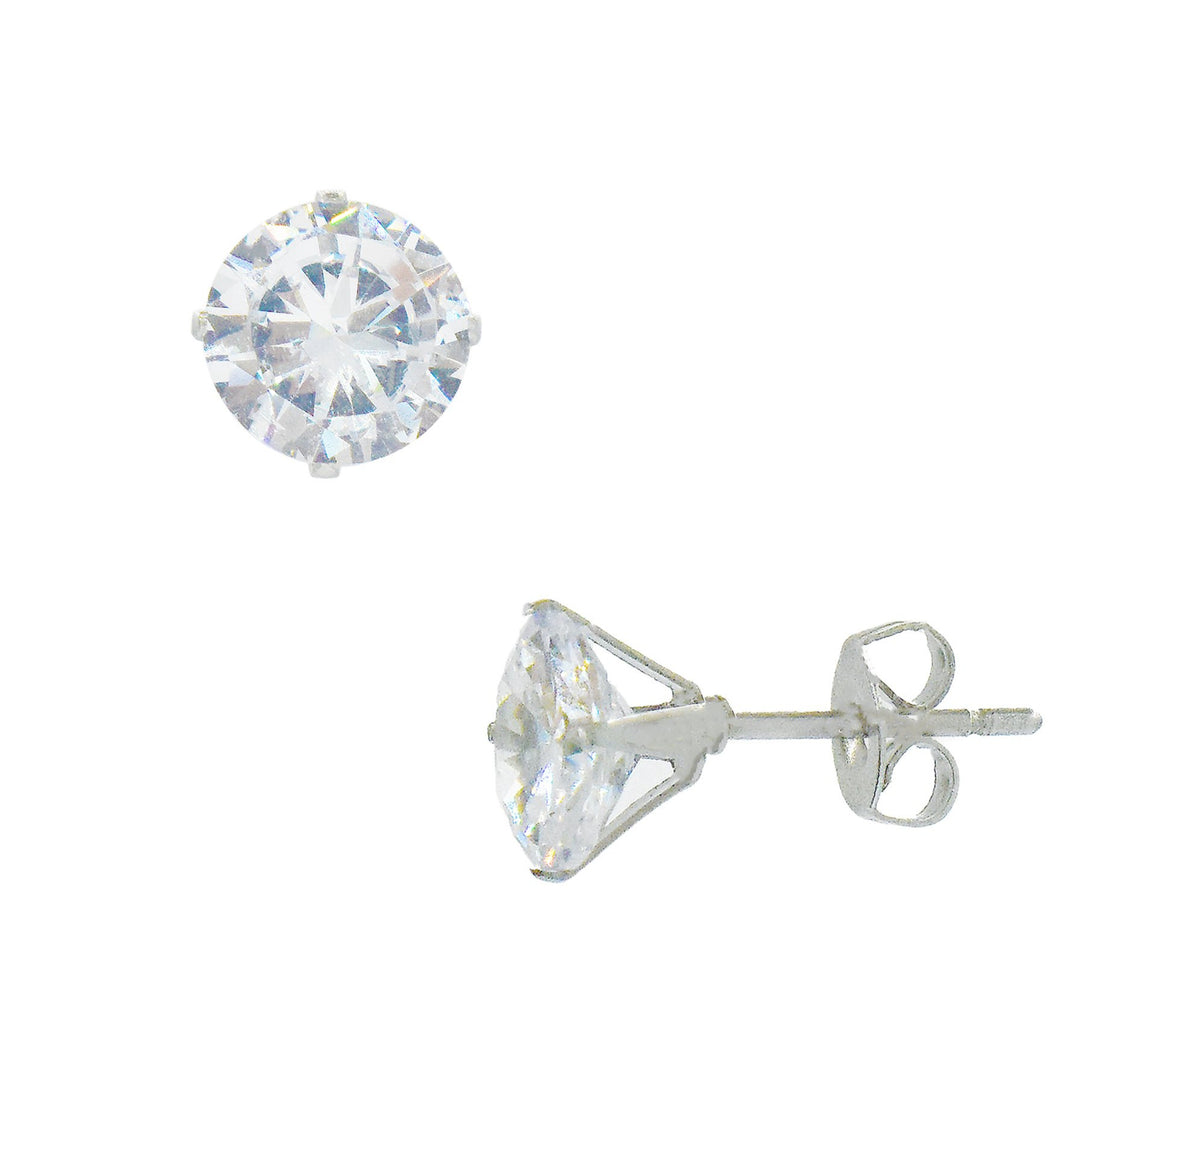 large diamond stud earrings hypoallergenic